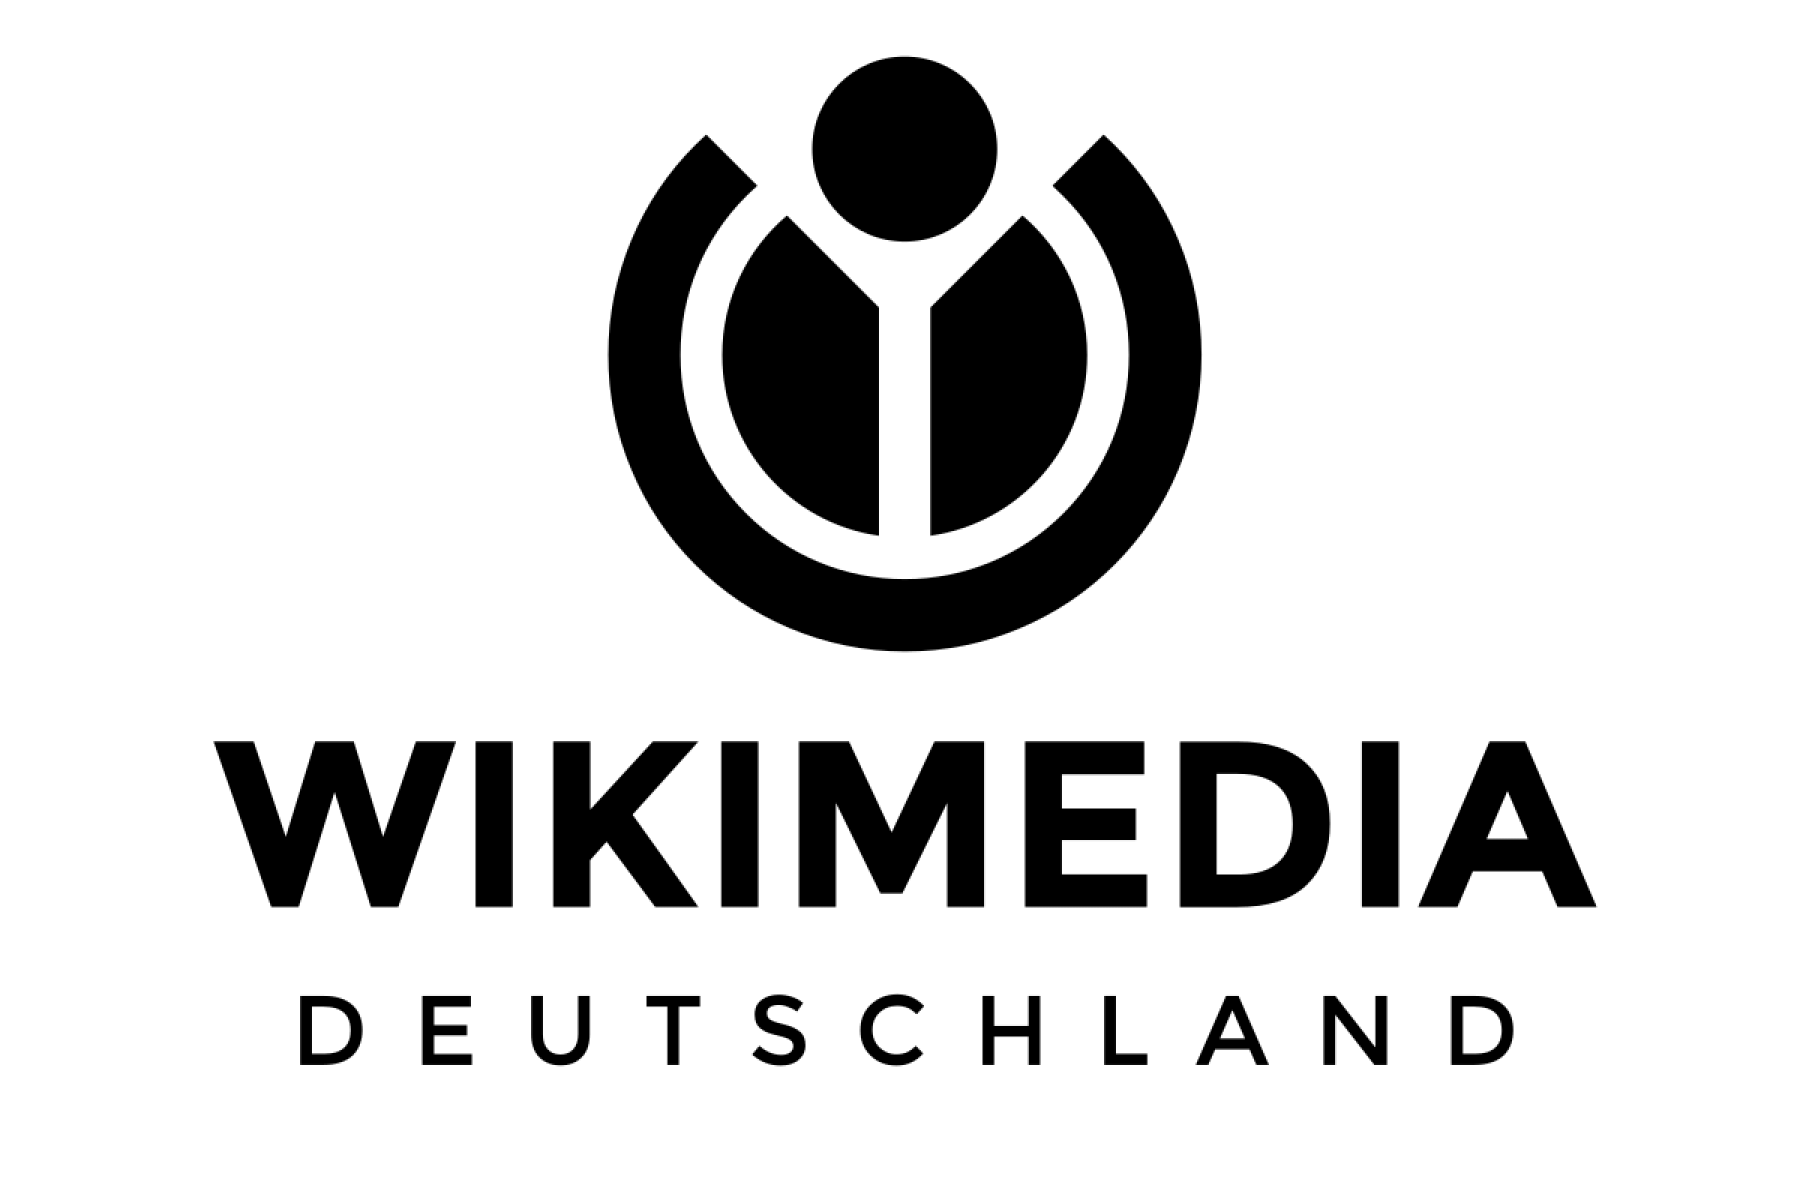 Logo Wikimedia Deutschland